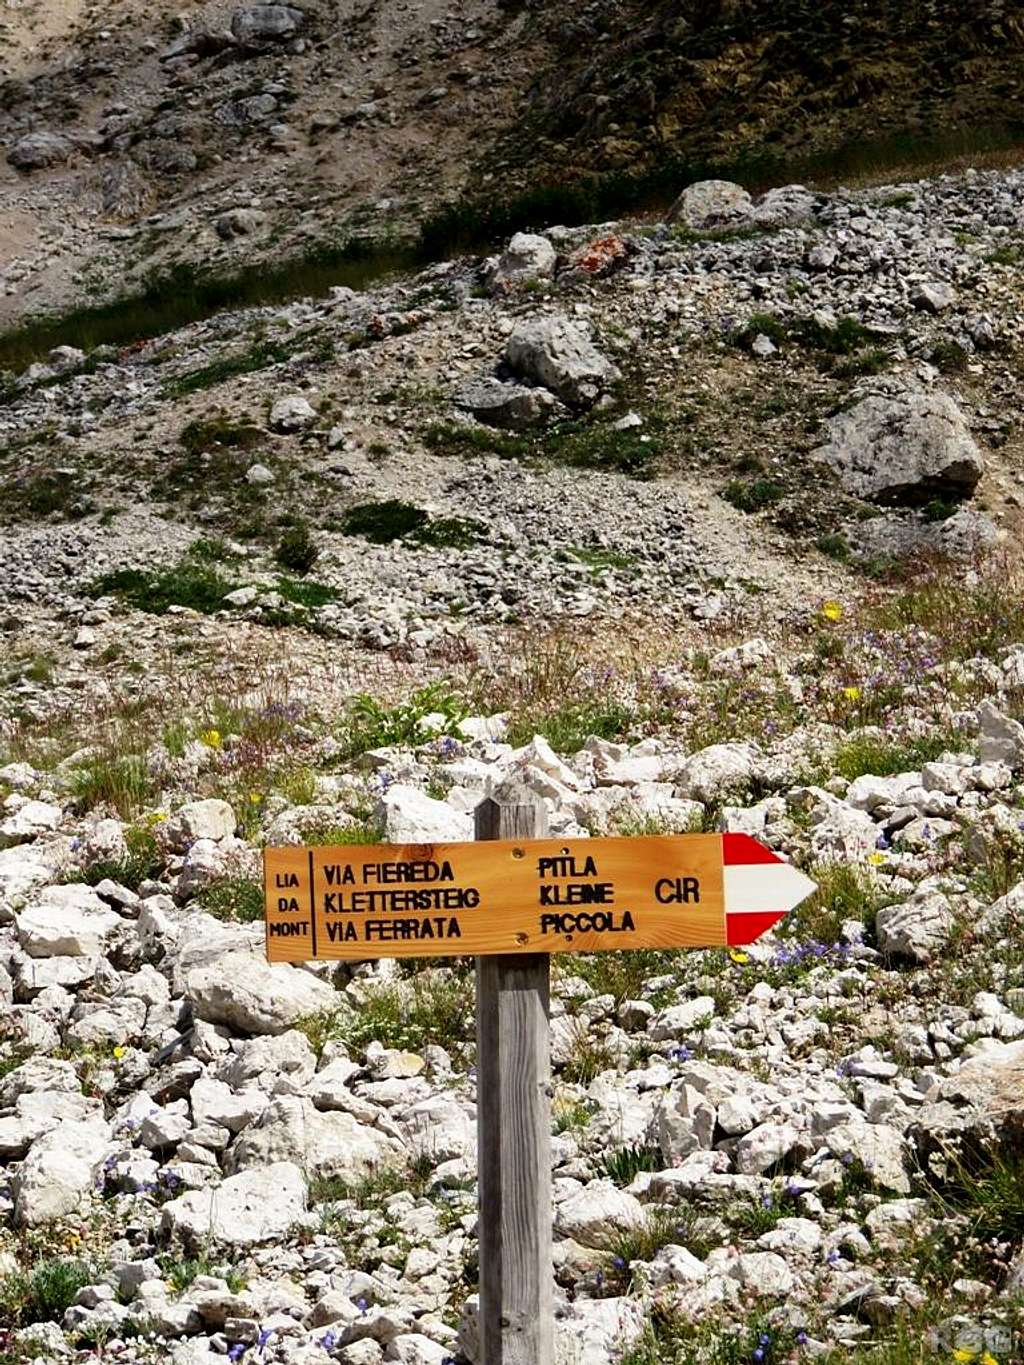 Route sign to the Via Ferrata